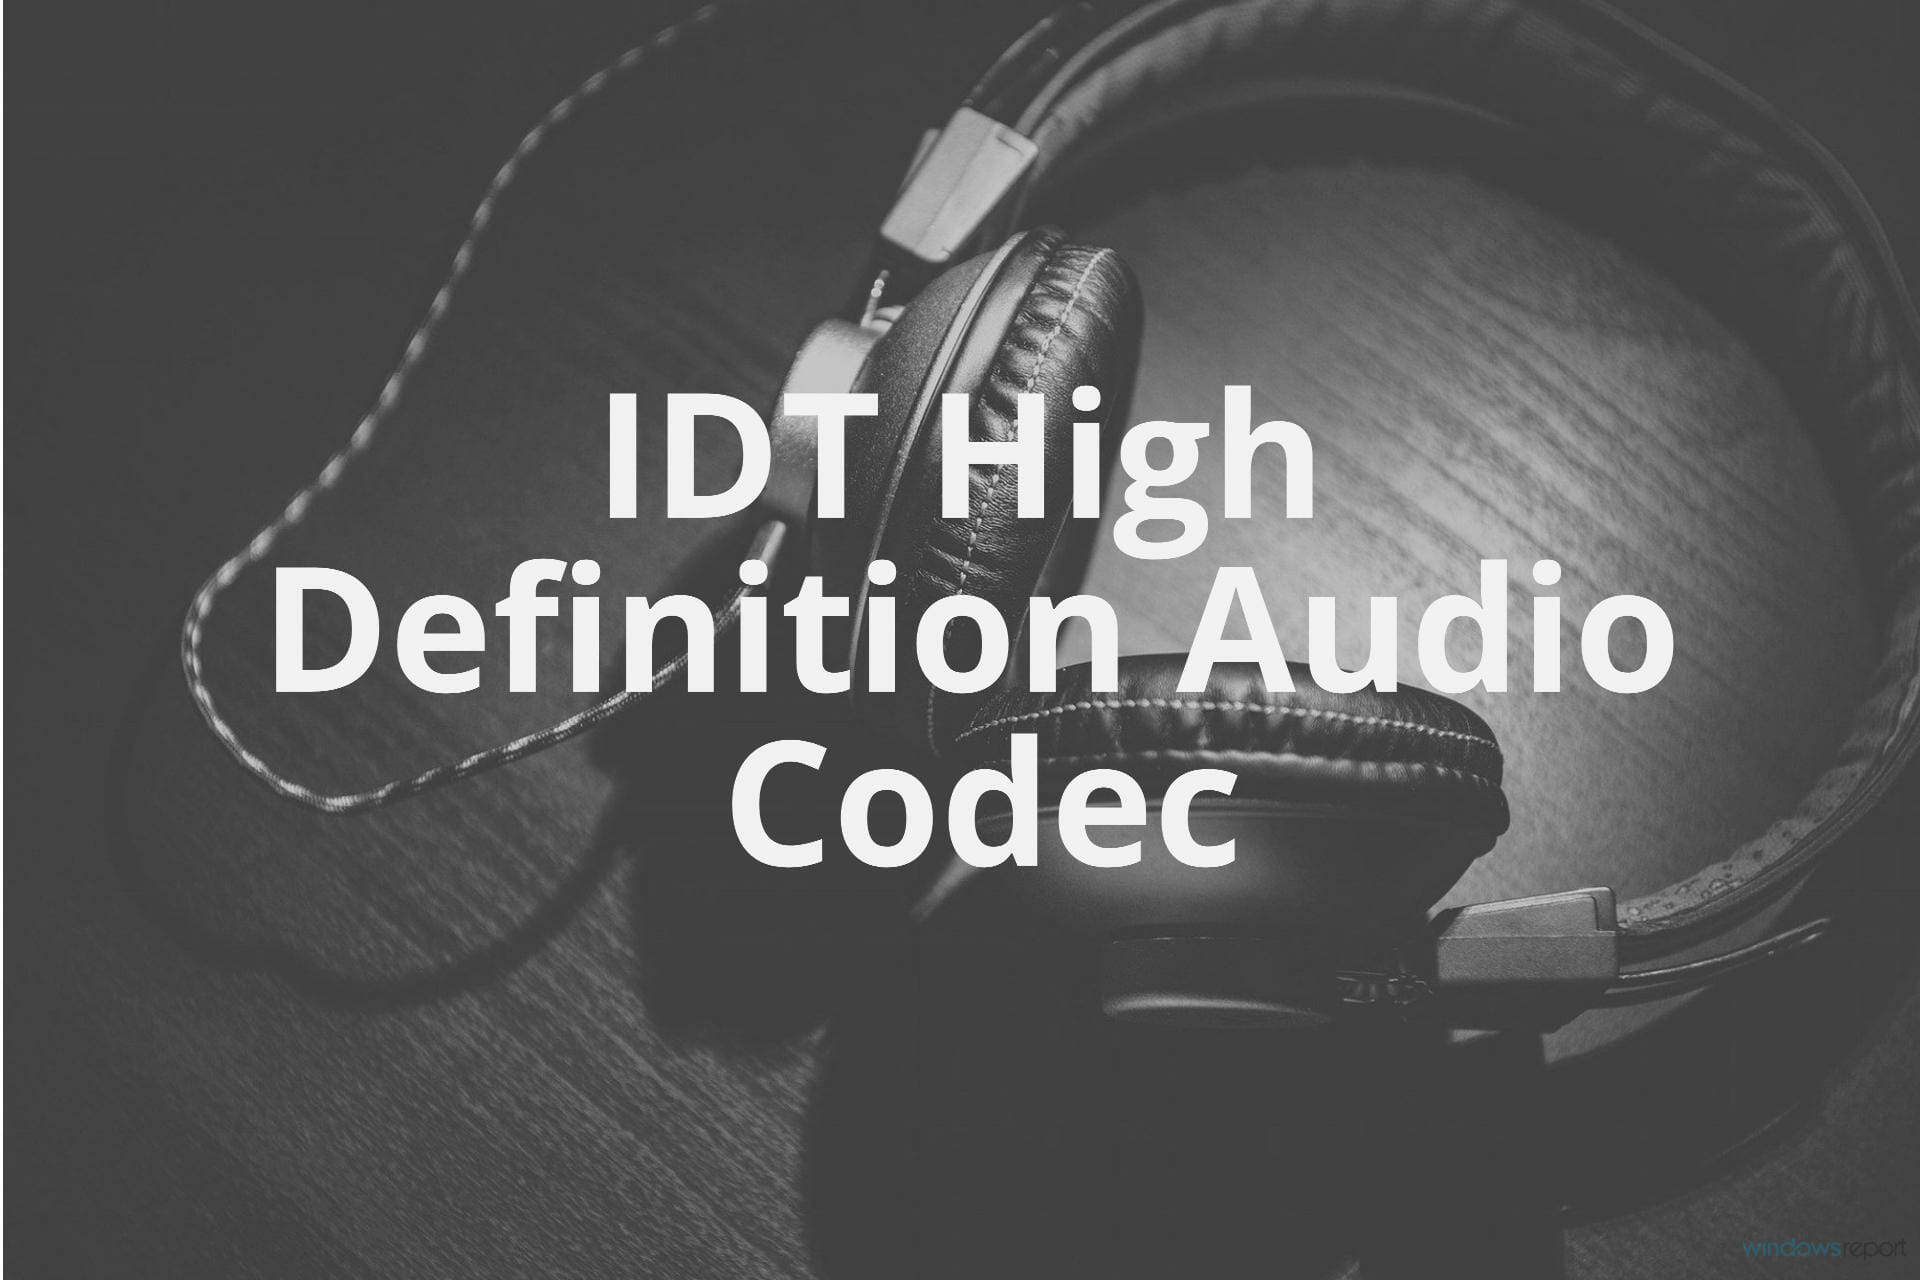 Fix idt high definition audio codec has a driver problem